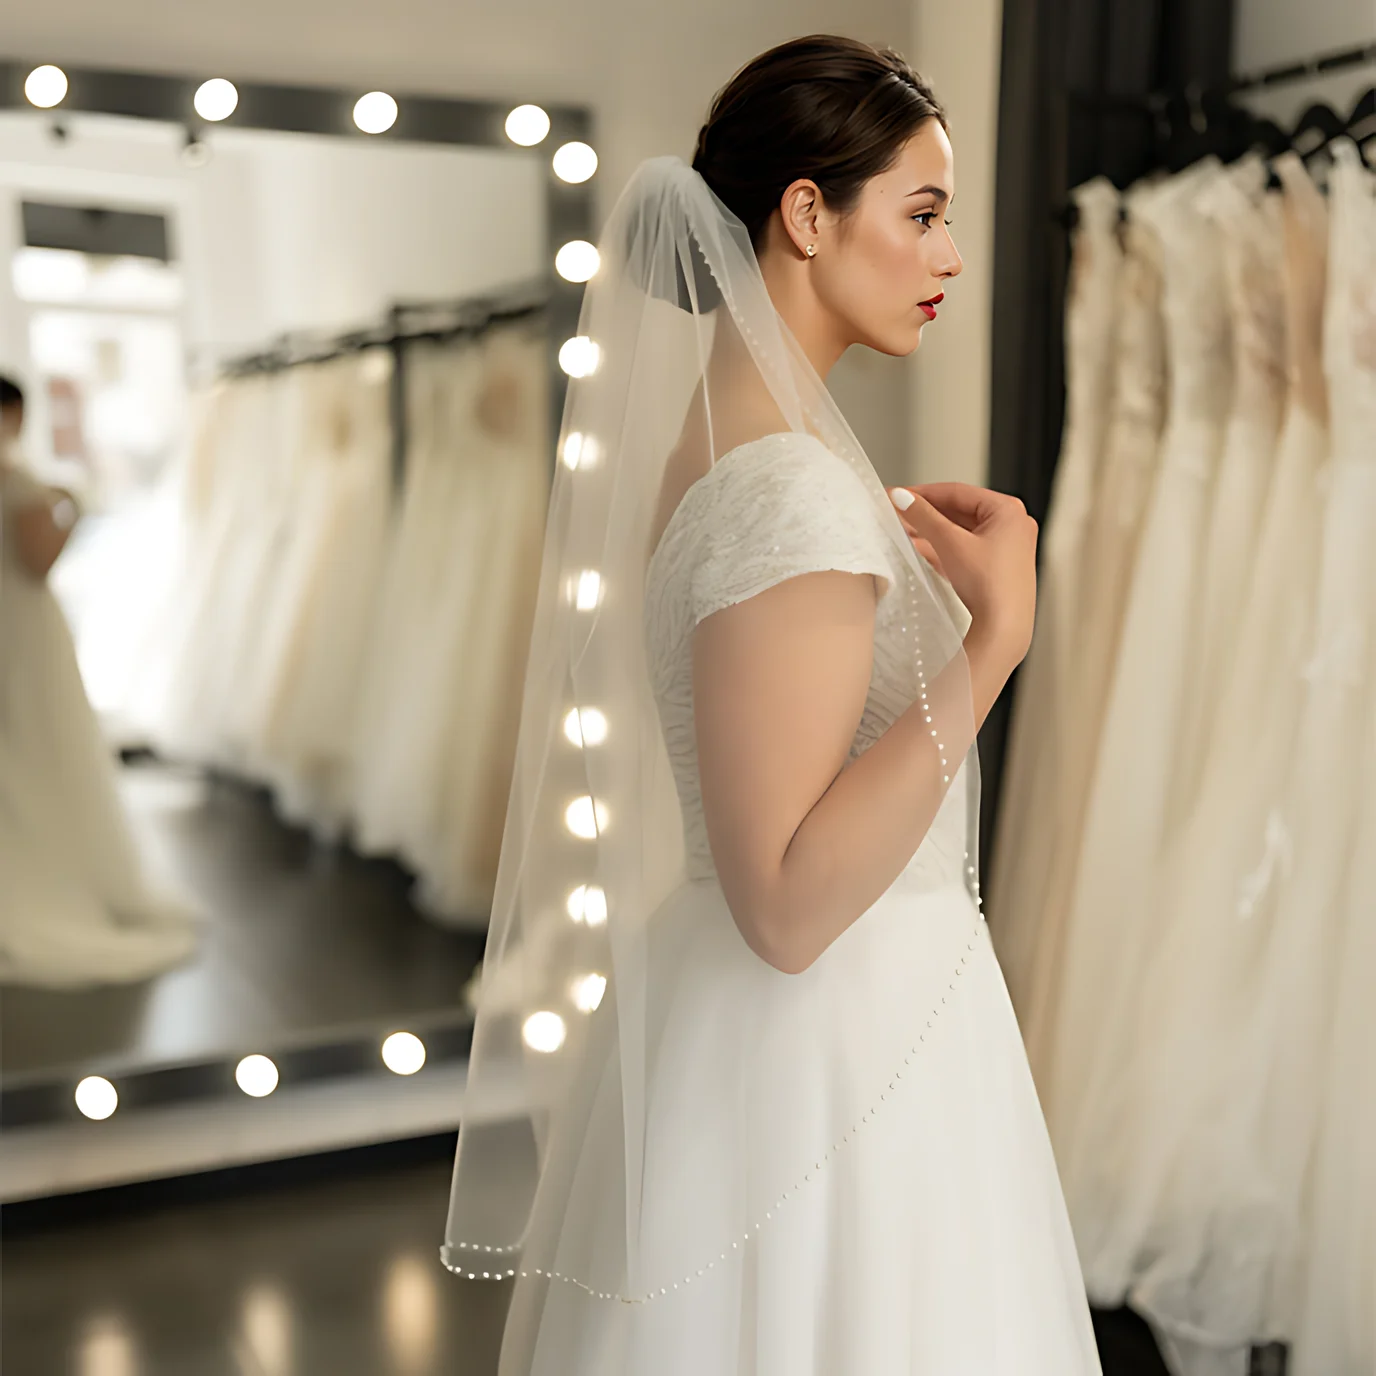 

Elegant Wedding Veil with Pearls Edge Bridal Veils 1 Tier Fingertip Length white Soft Tulle Wedding Accessories for Bride VP46